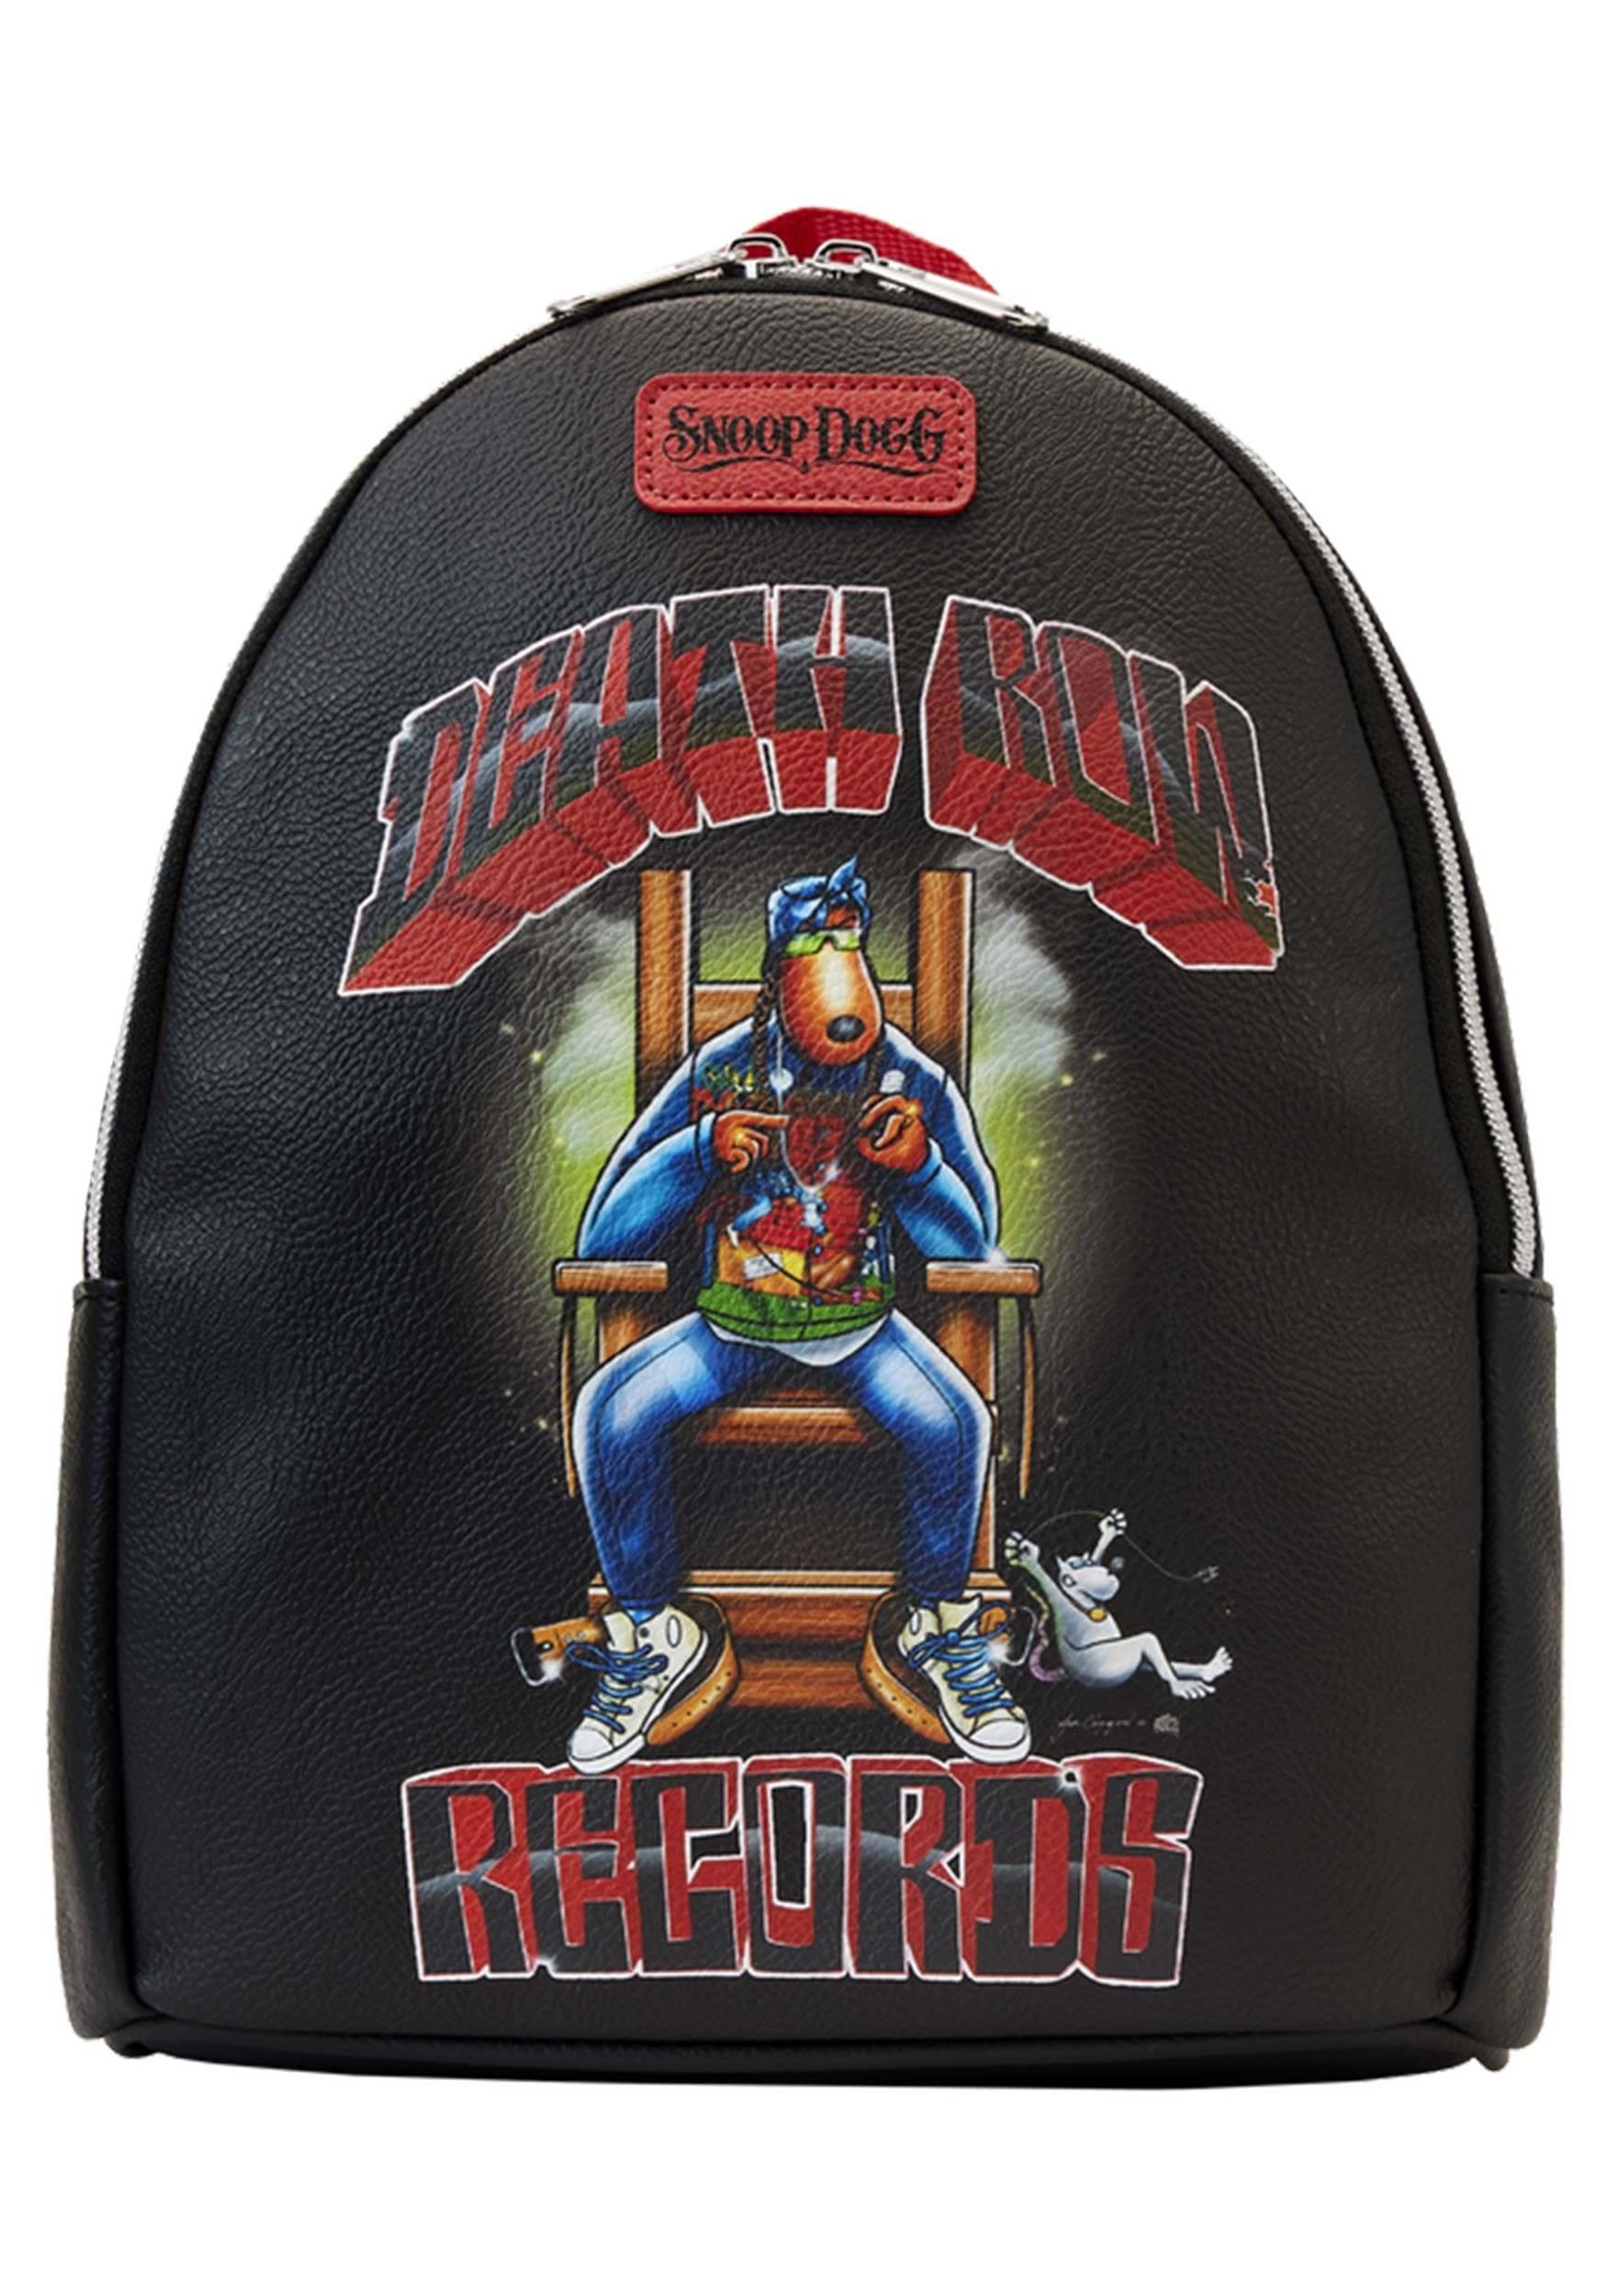 Snoop Dogg - Death Row Records Funko Mini Backpack